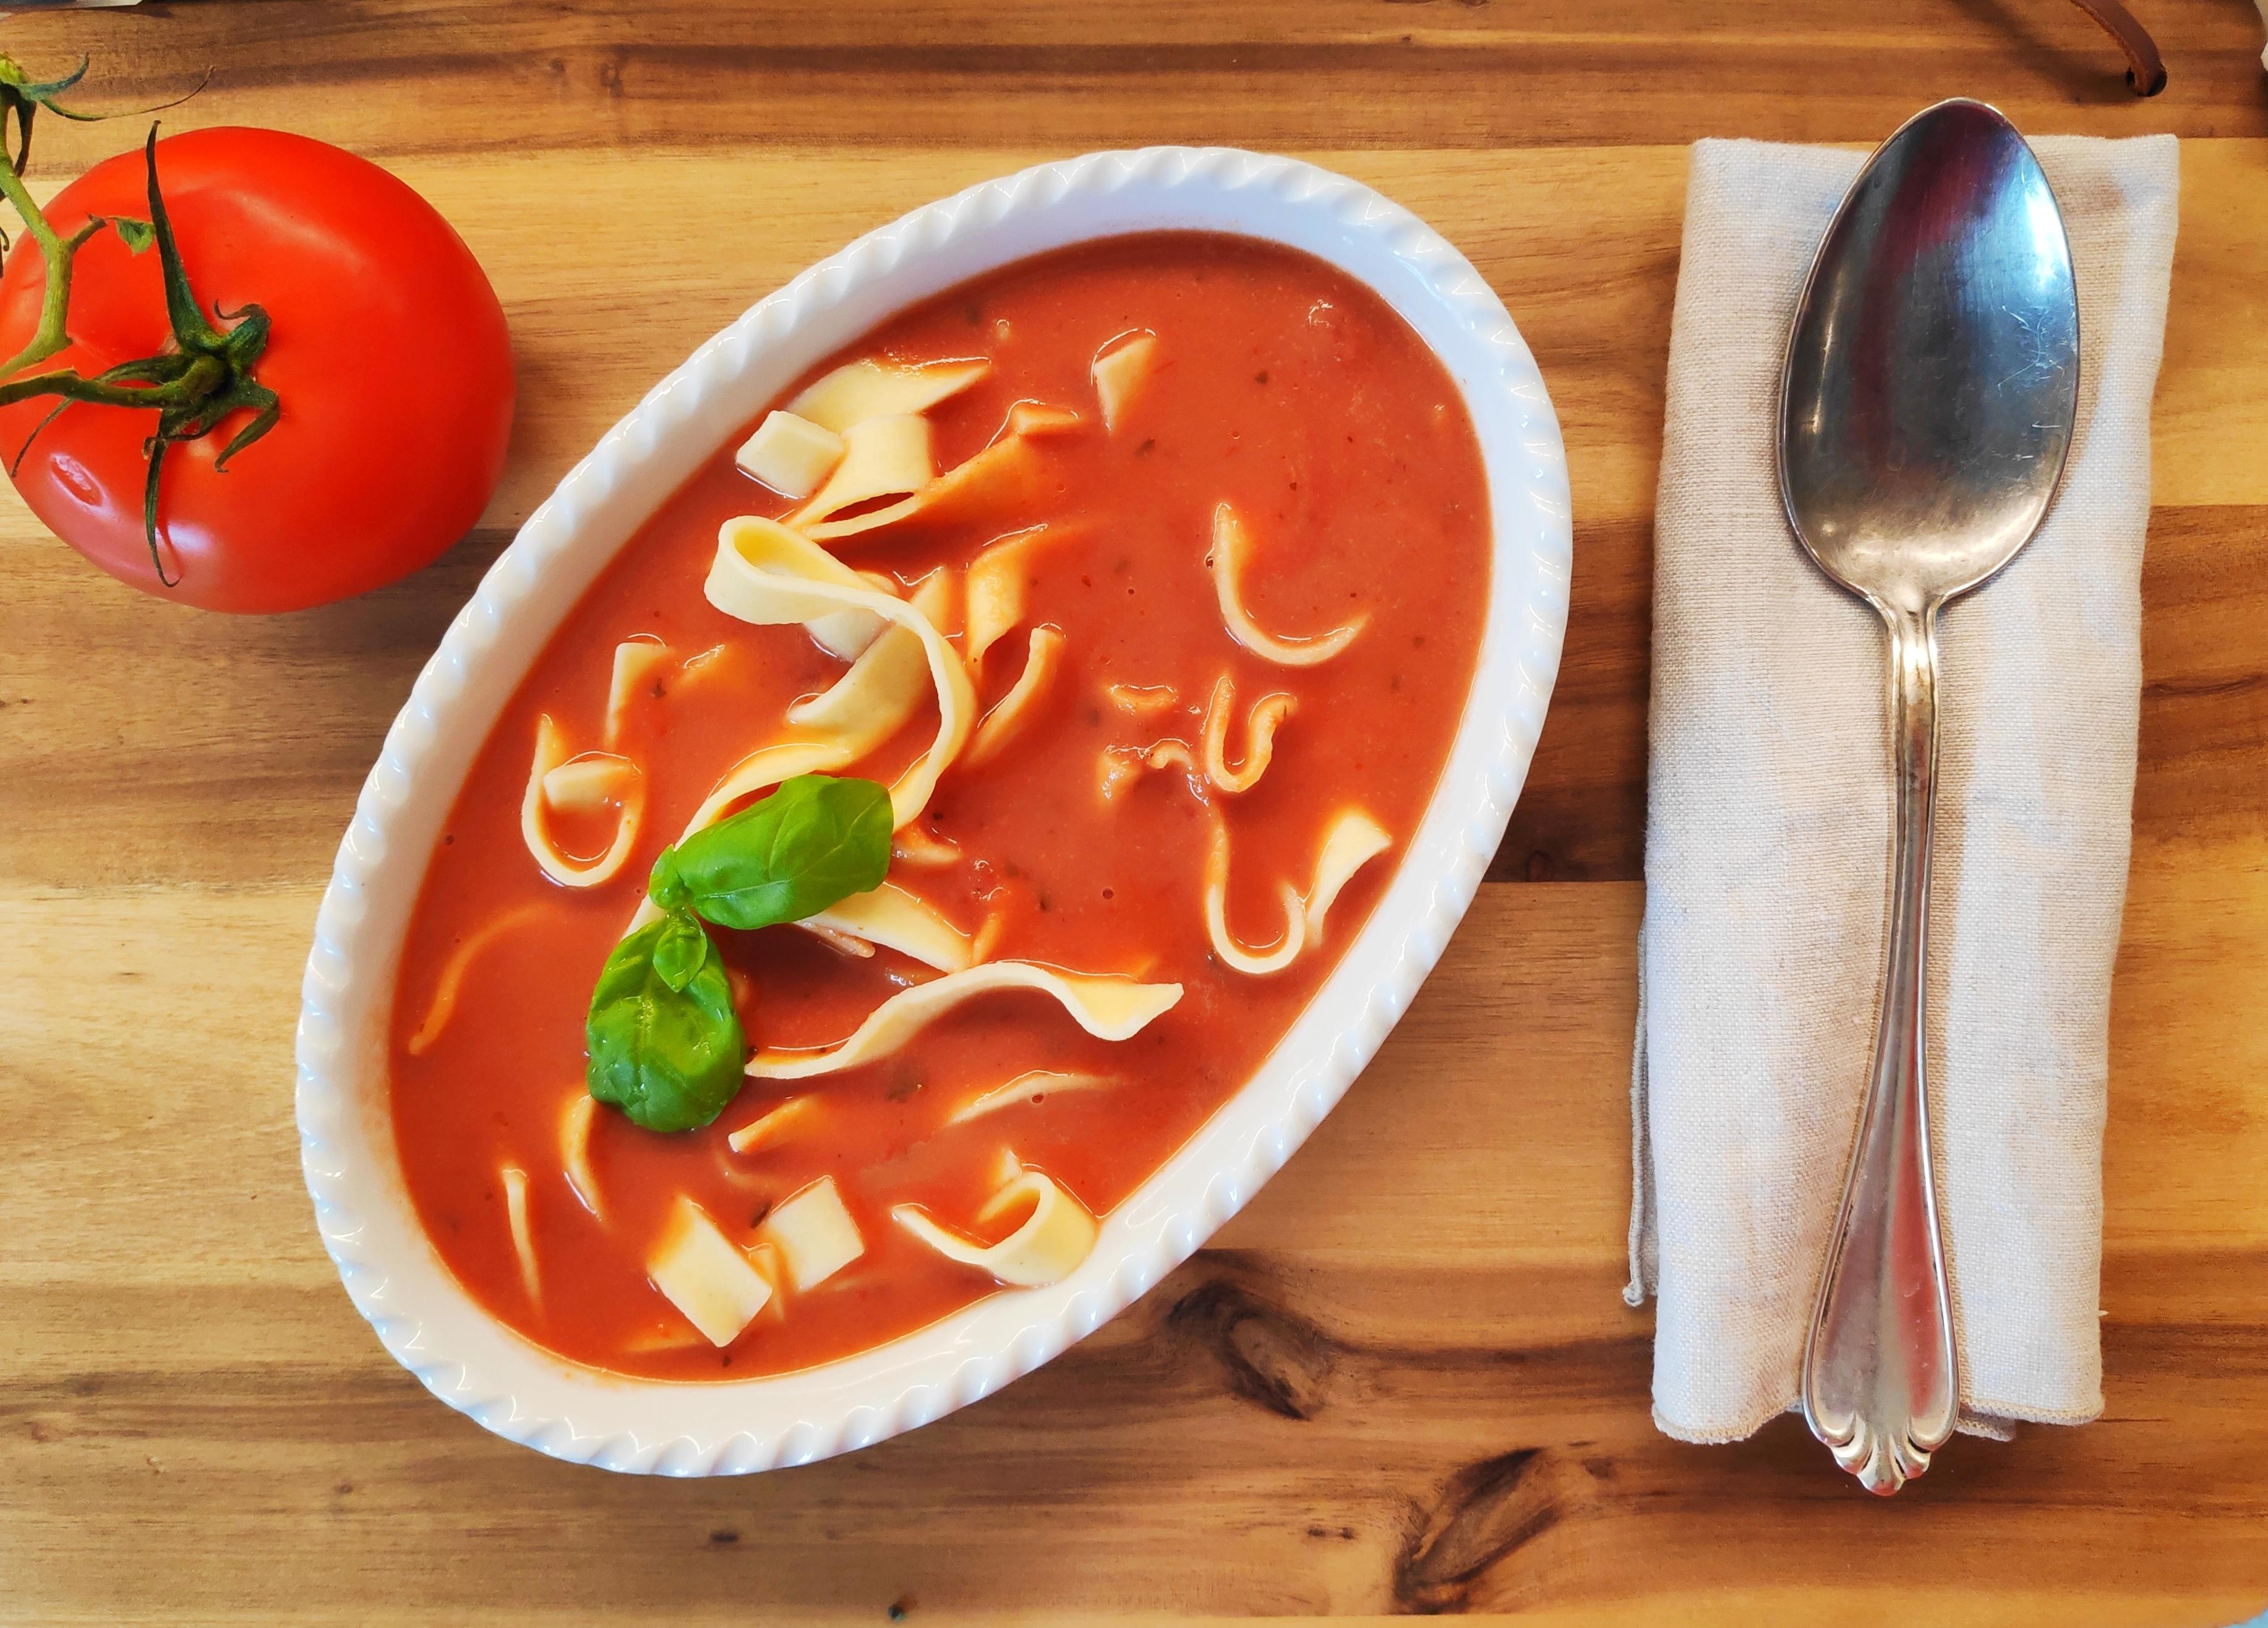 .Diesmal Tomatensuppe.
#Tomatensuppe #Tomaten #Suppe #vegan